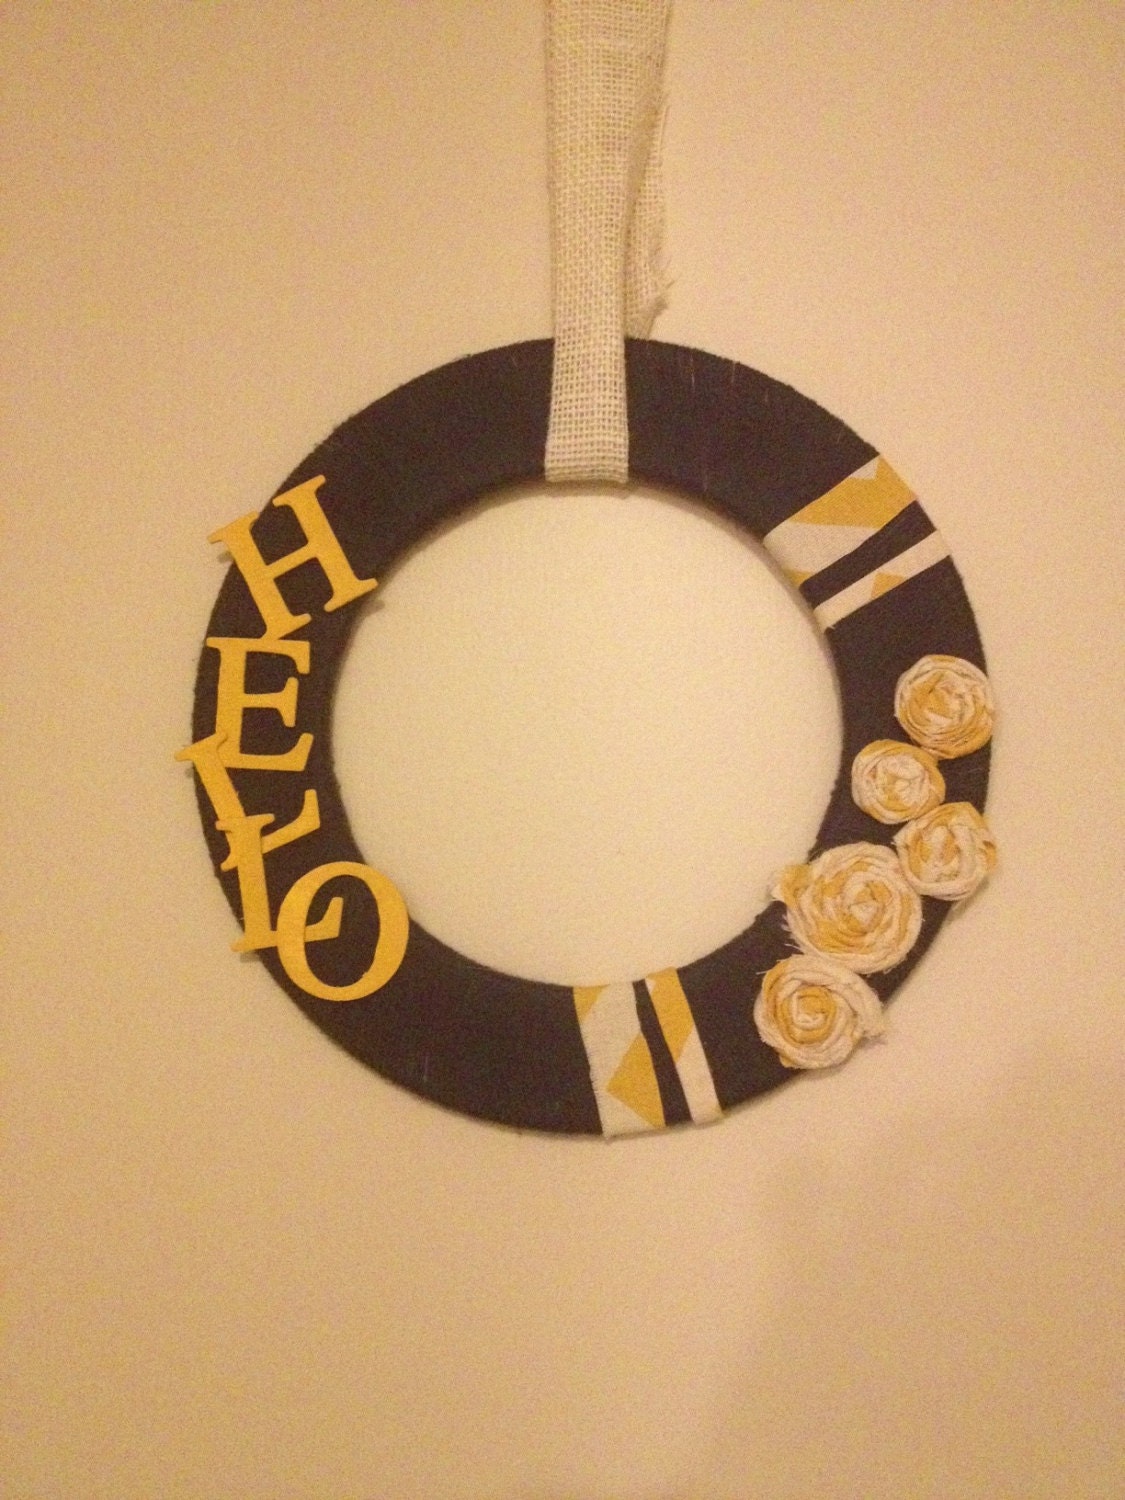 12" Circular Navy Yarn and Yellow Fabric "Hello" Wreath